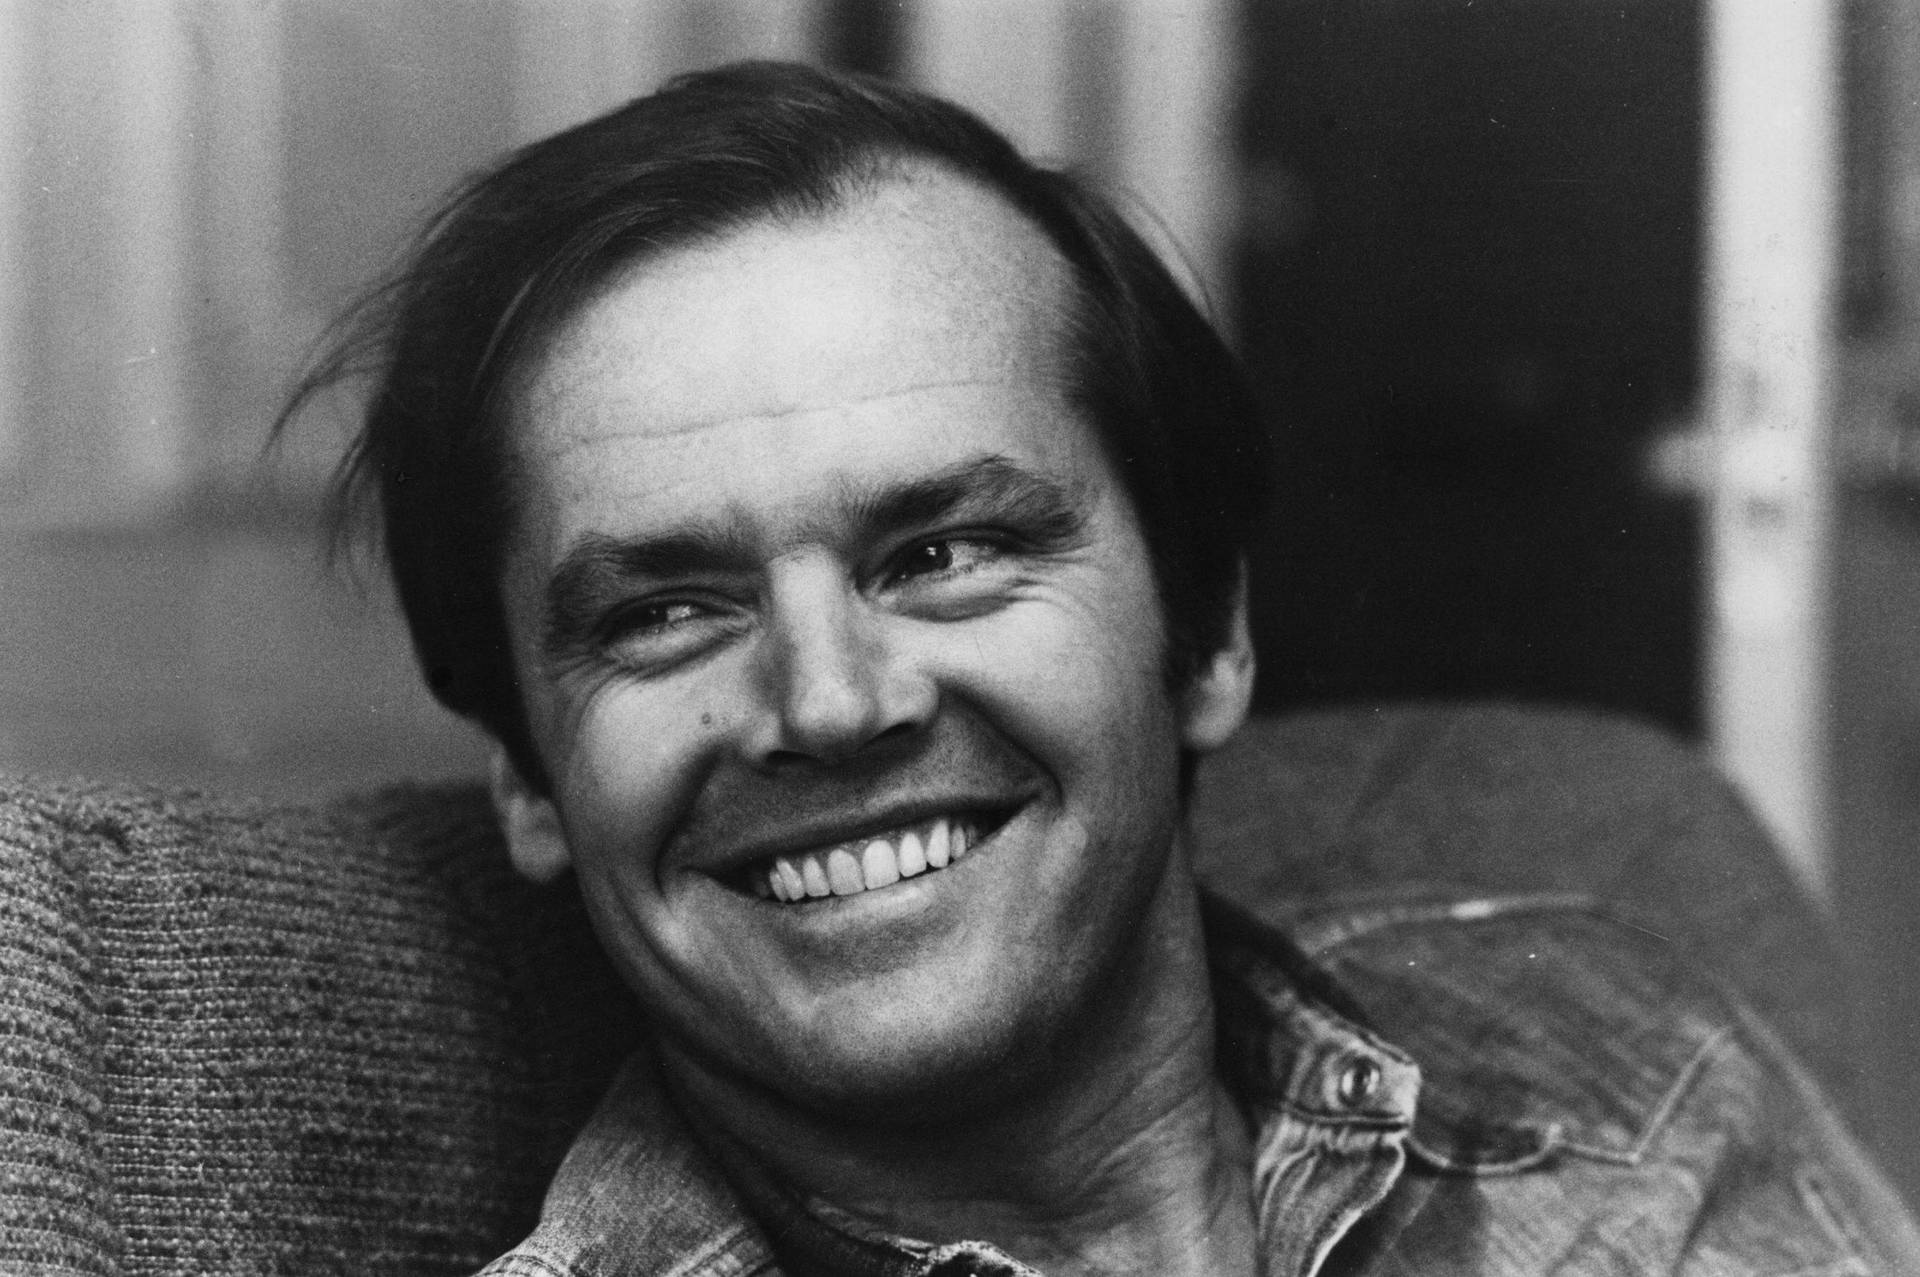 Jack Nicholson Wallpaper